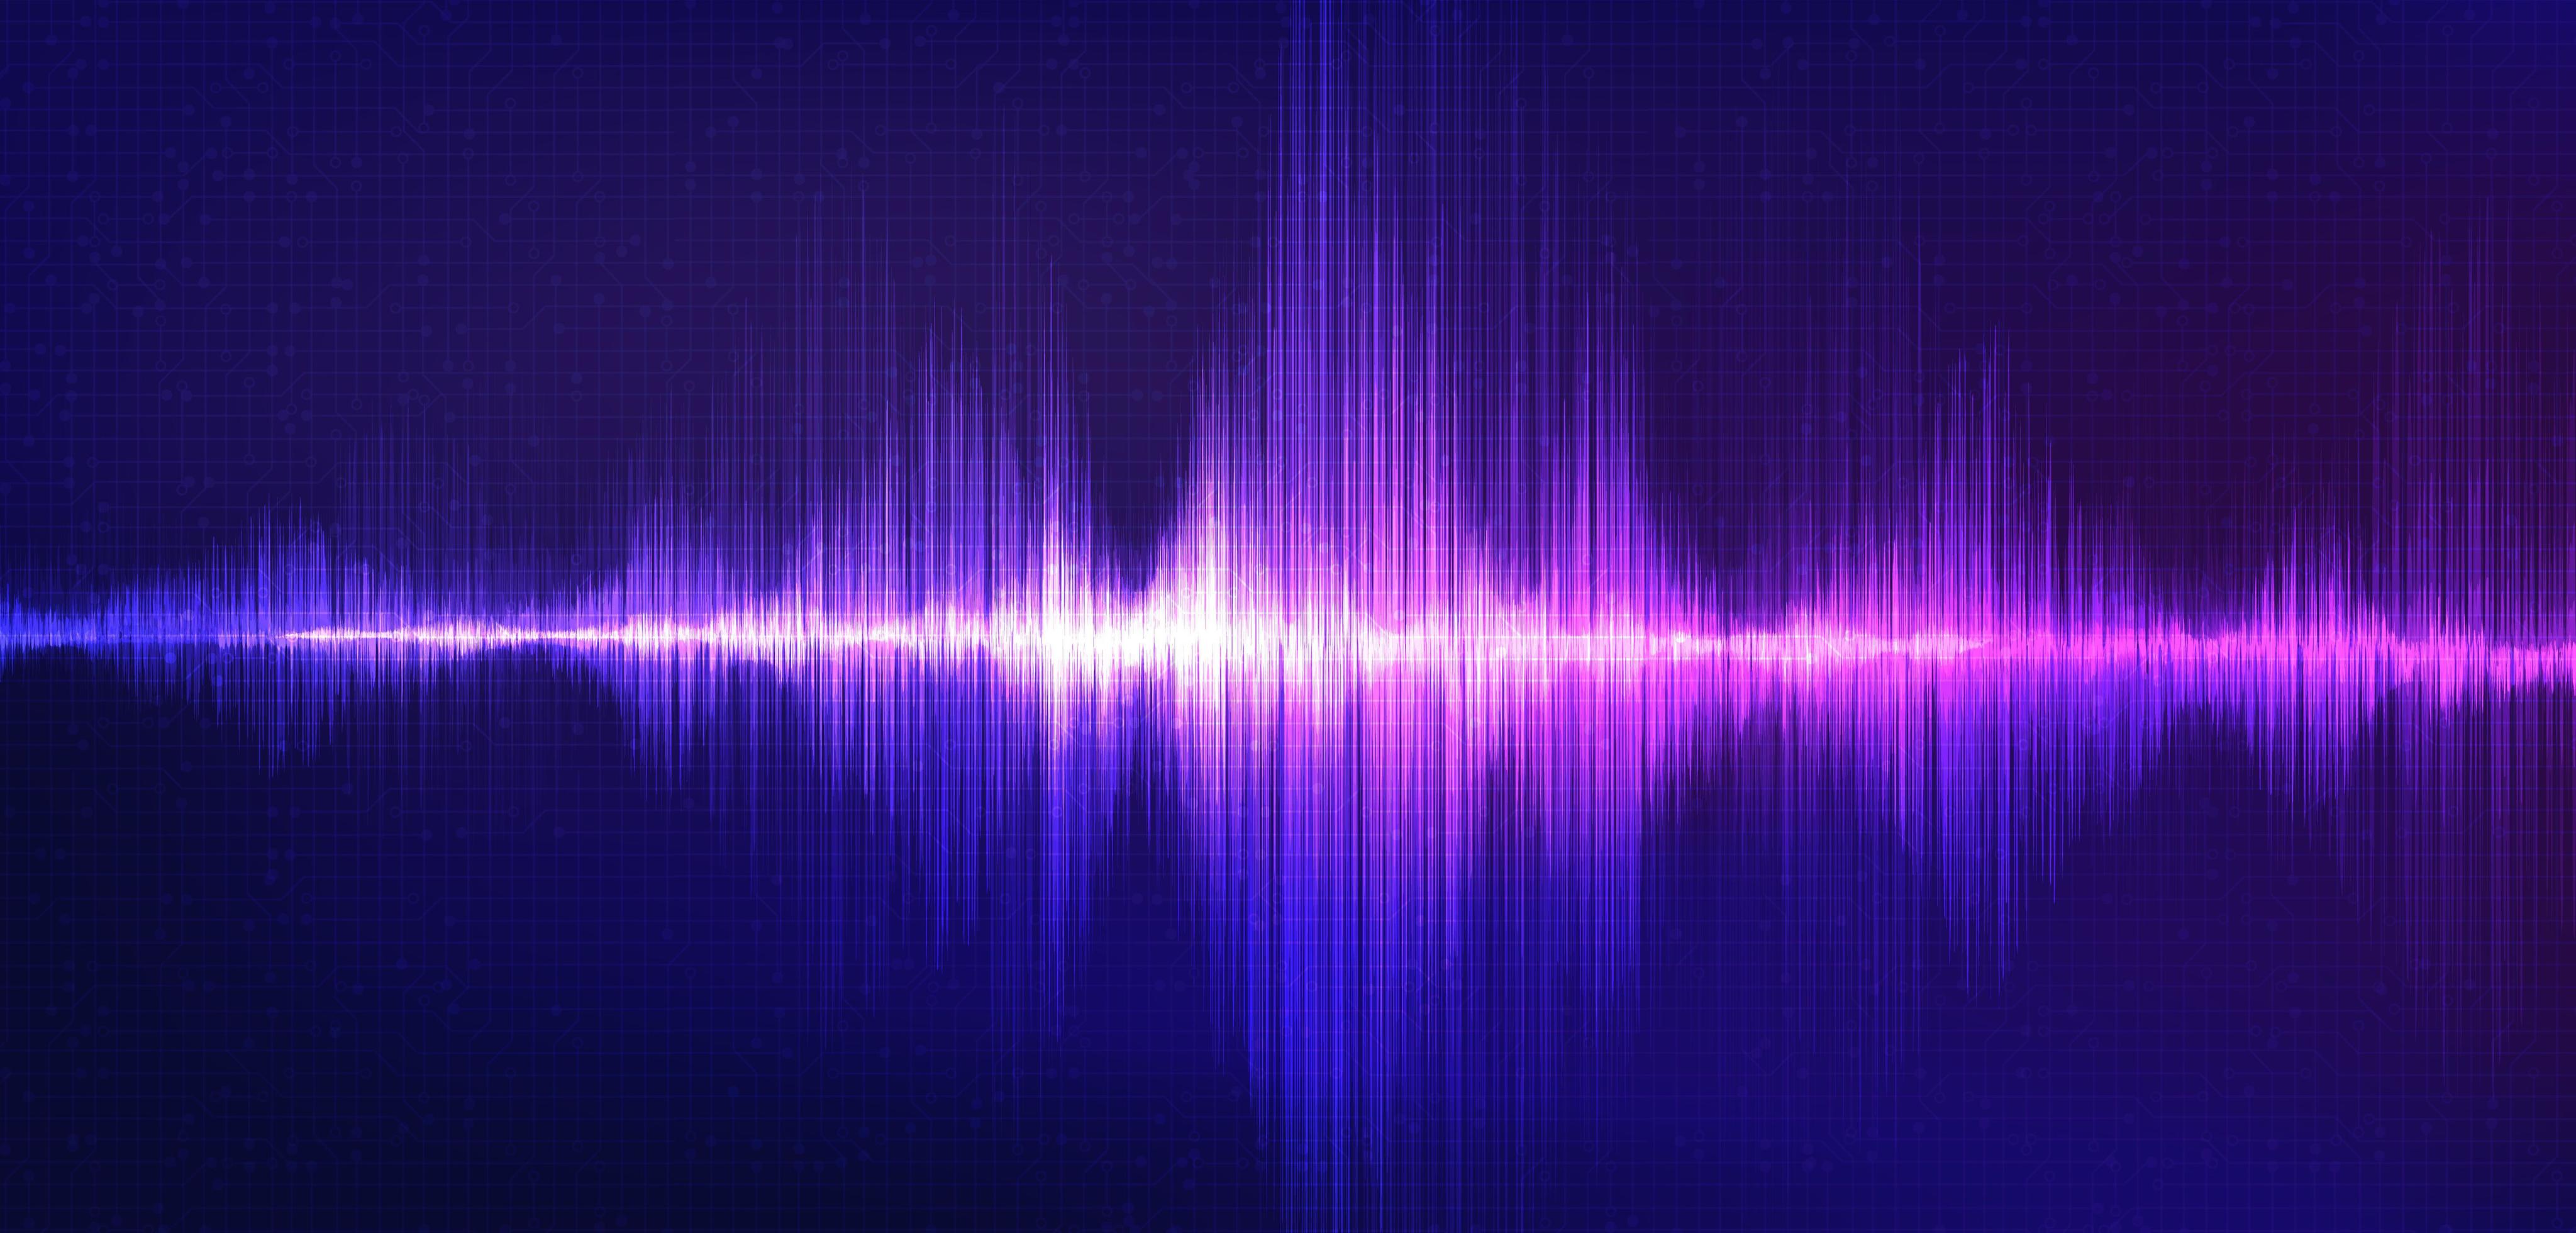 Light Sound Wave on Purple Background,Technology Wave concept,design